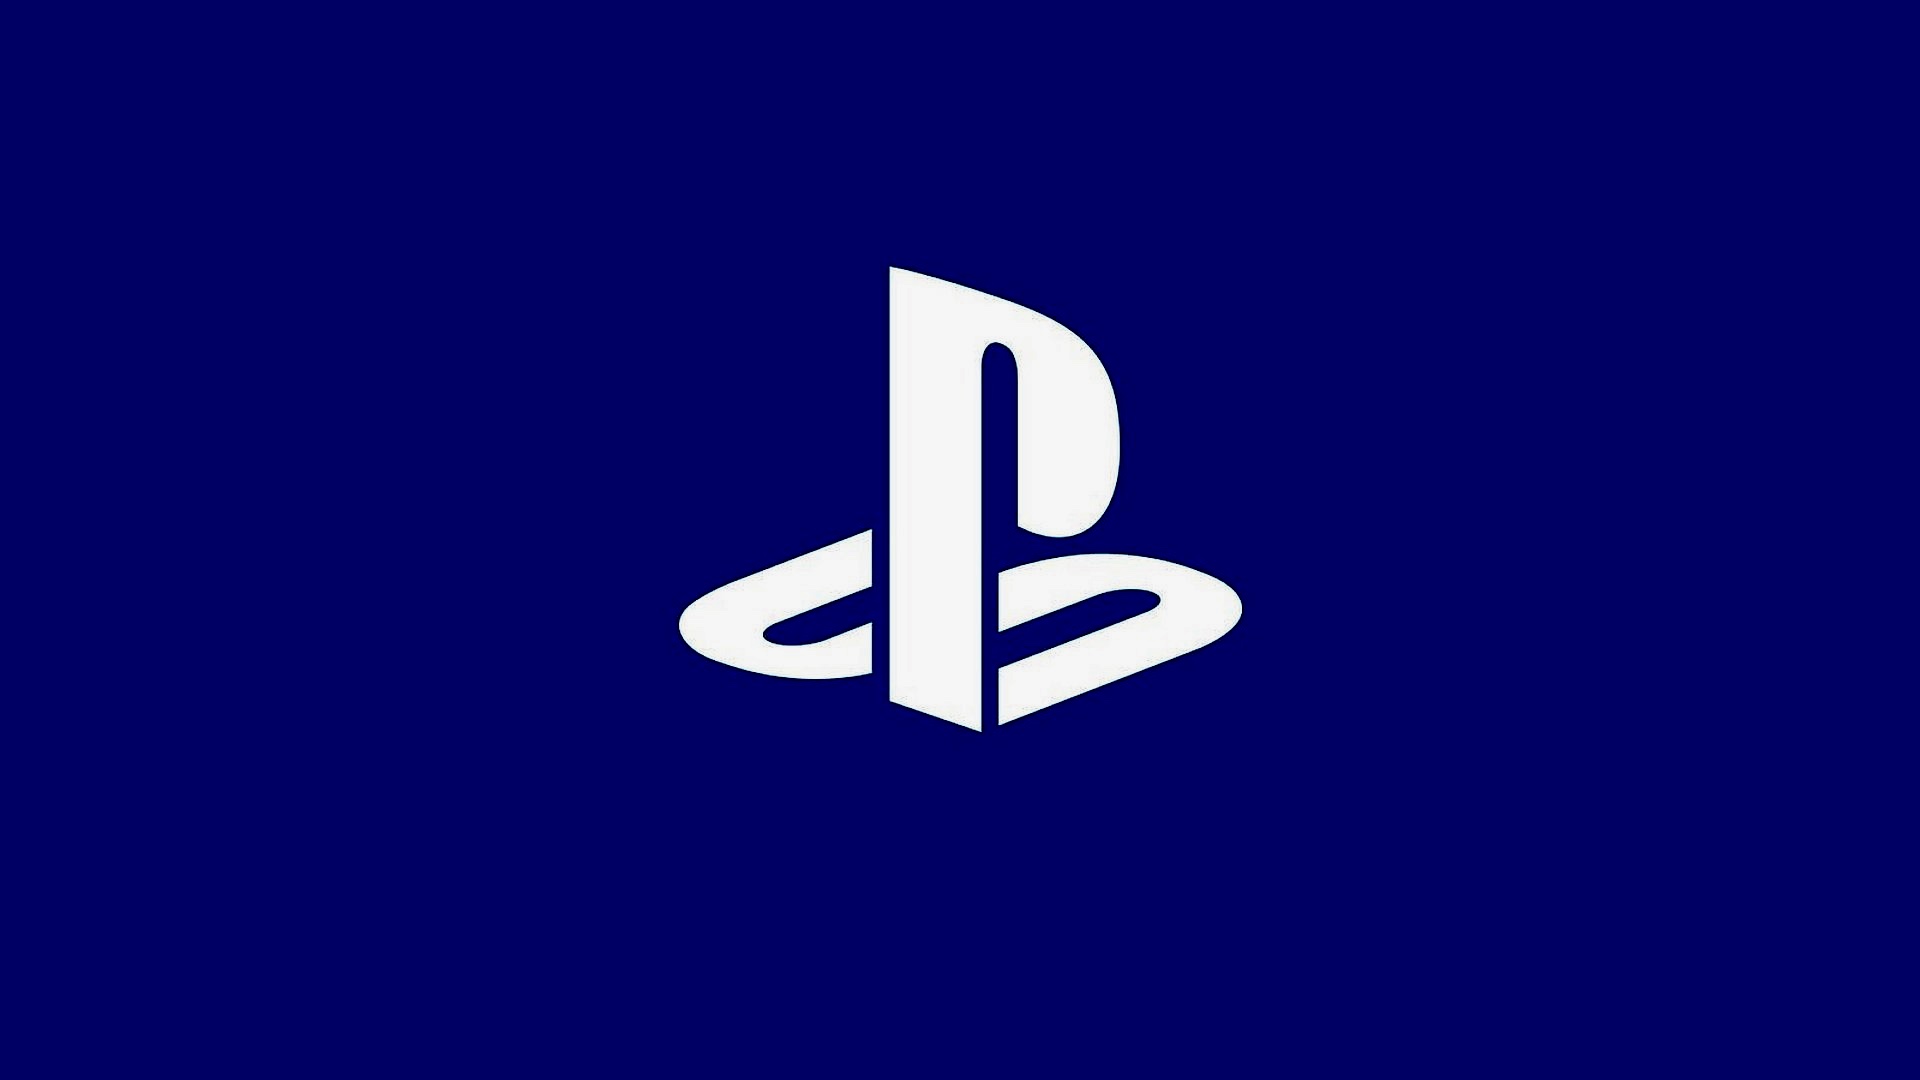 Logotip de Playstation